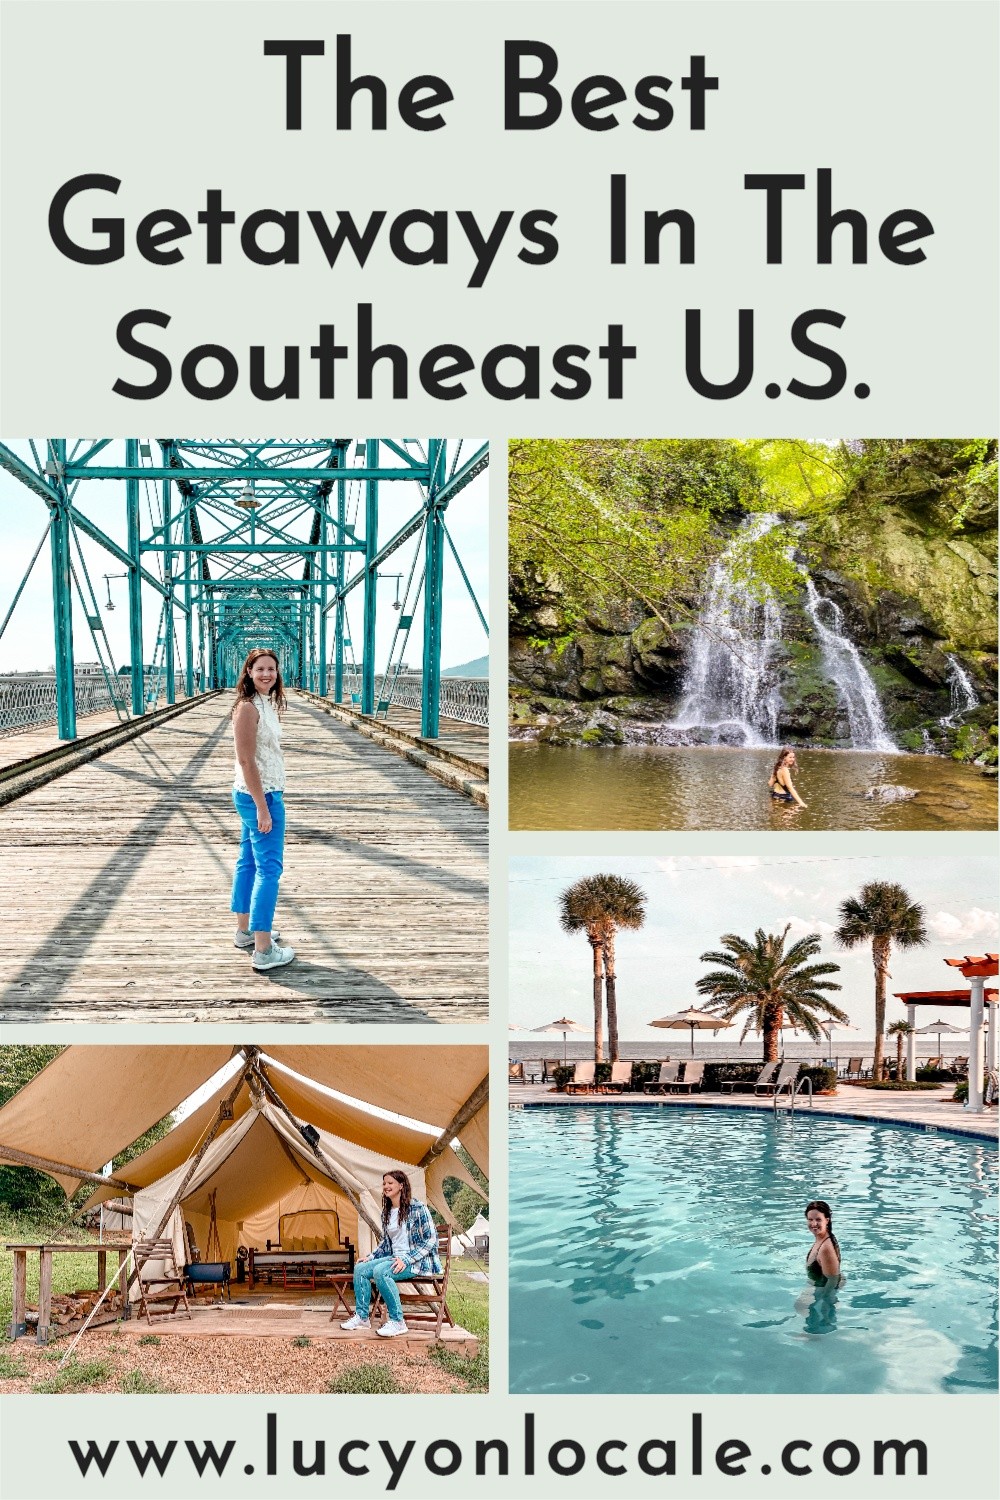 The best getaways in the Southeast U.S.